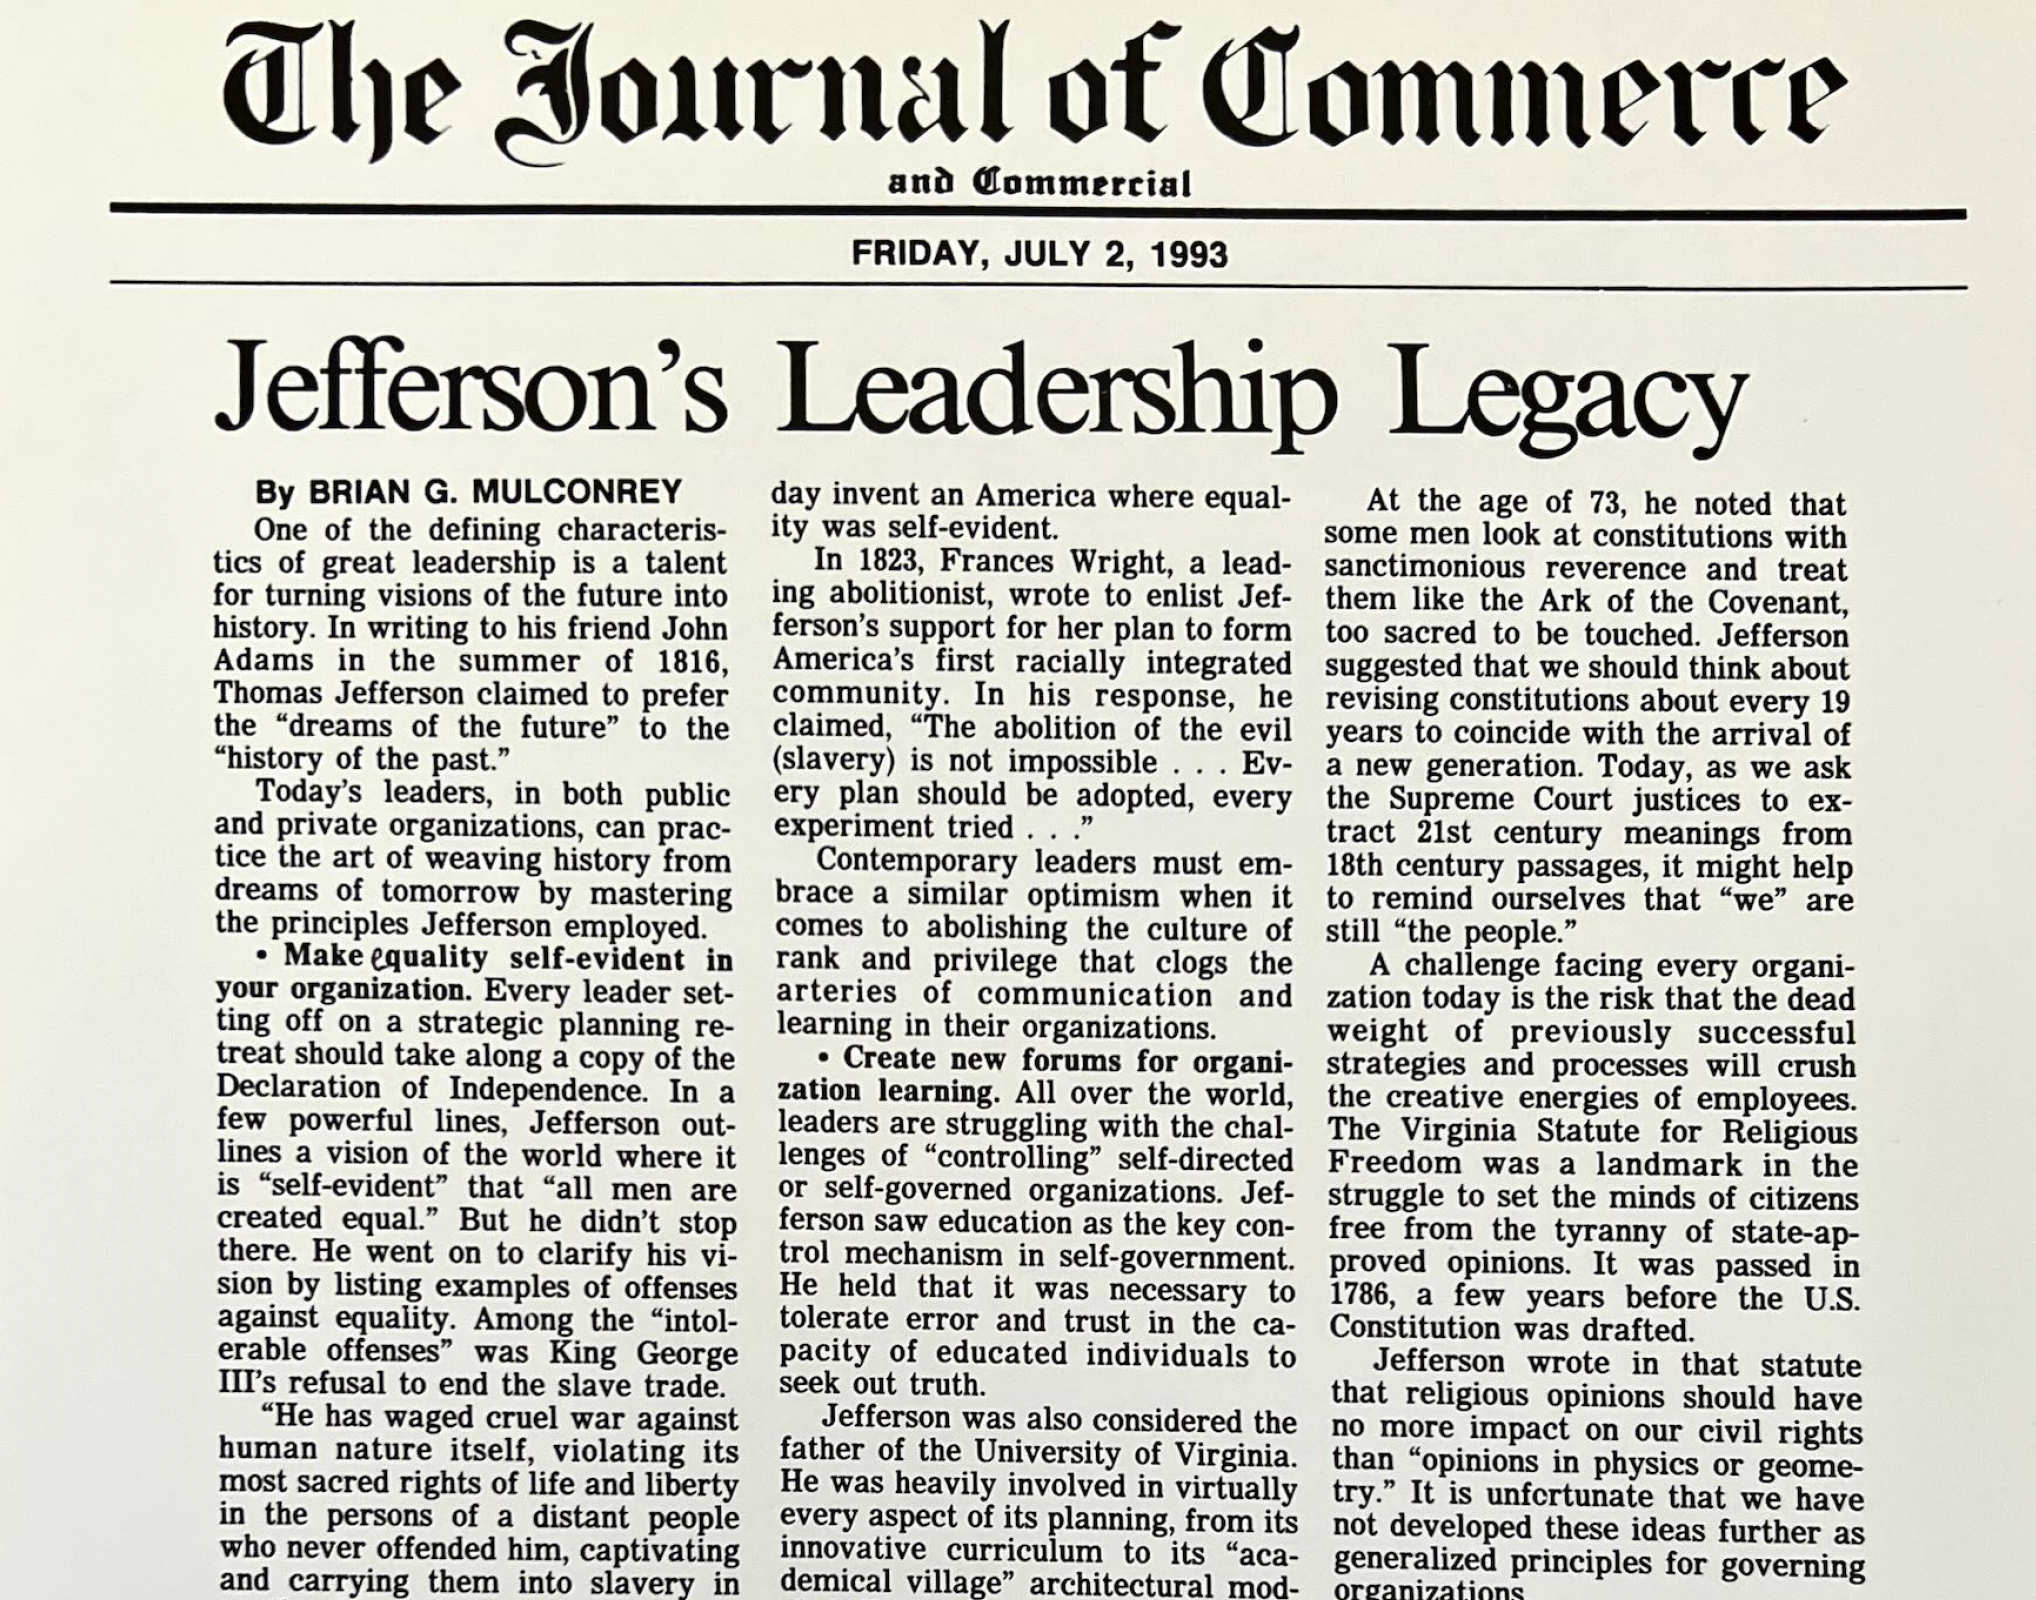 Jefferson’s Leadership Legacy (Journal of Commerce)